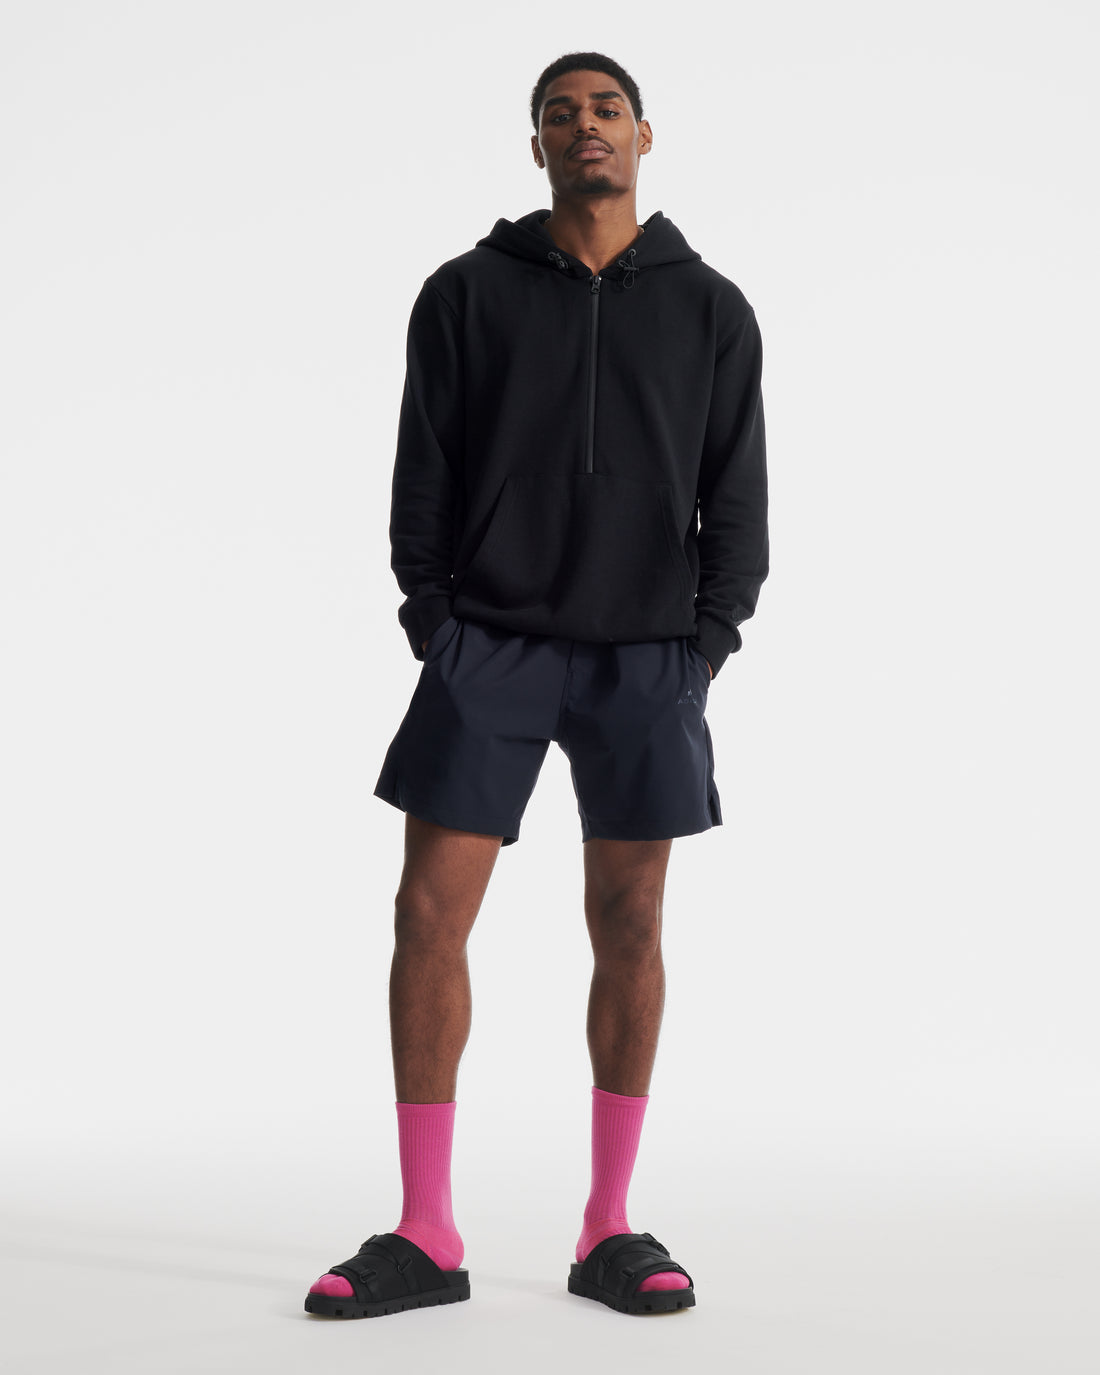 The ADIUM Black French Terry Half Zip Hoodie | "The Future of Fitness" Men's Health